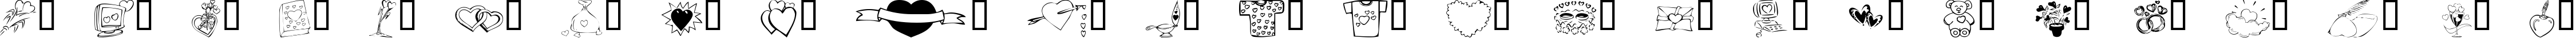 Пример написания английского алфавита шрифтом KR Valentines 2006 Ten